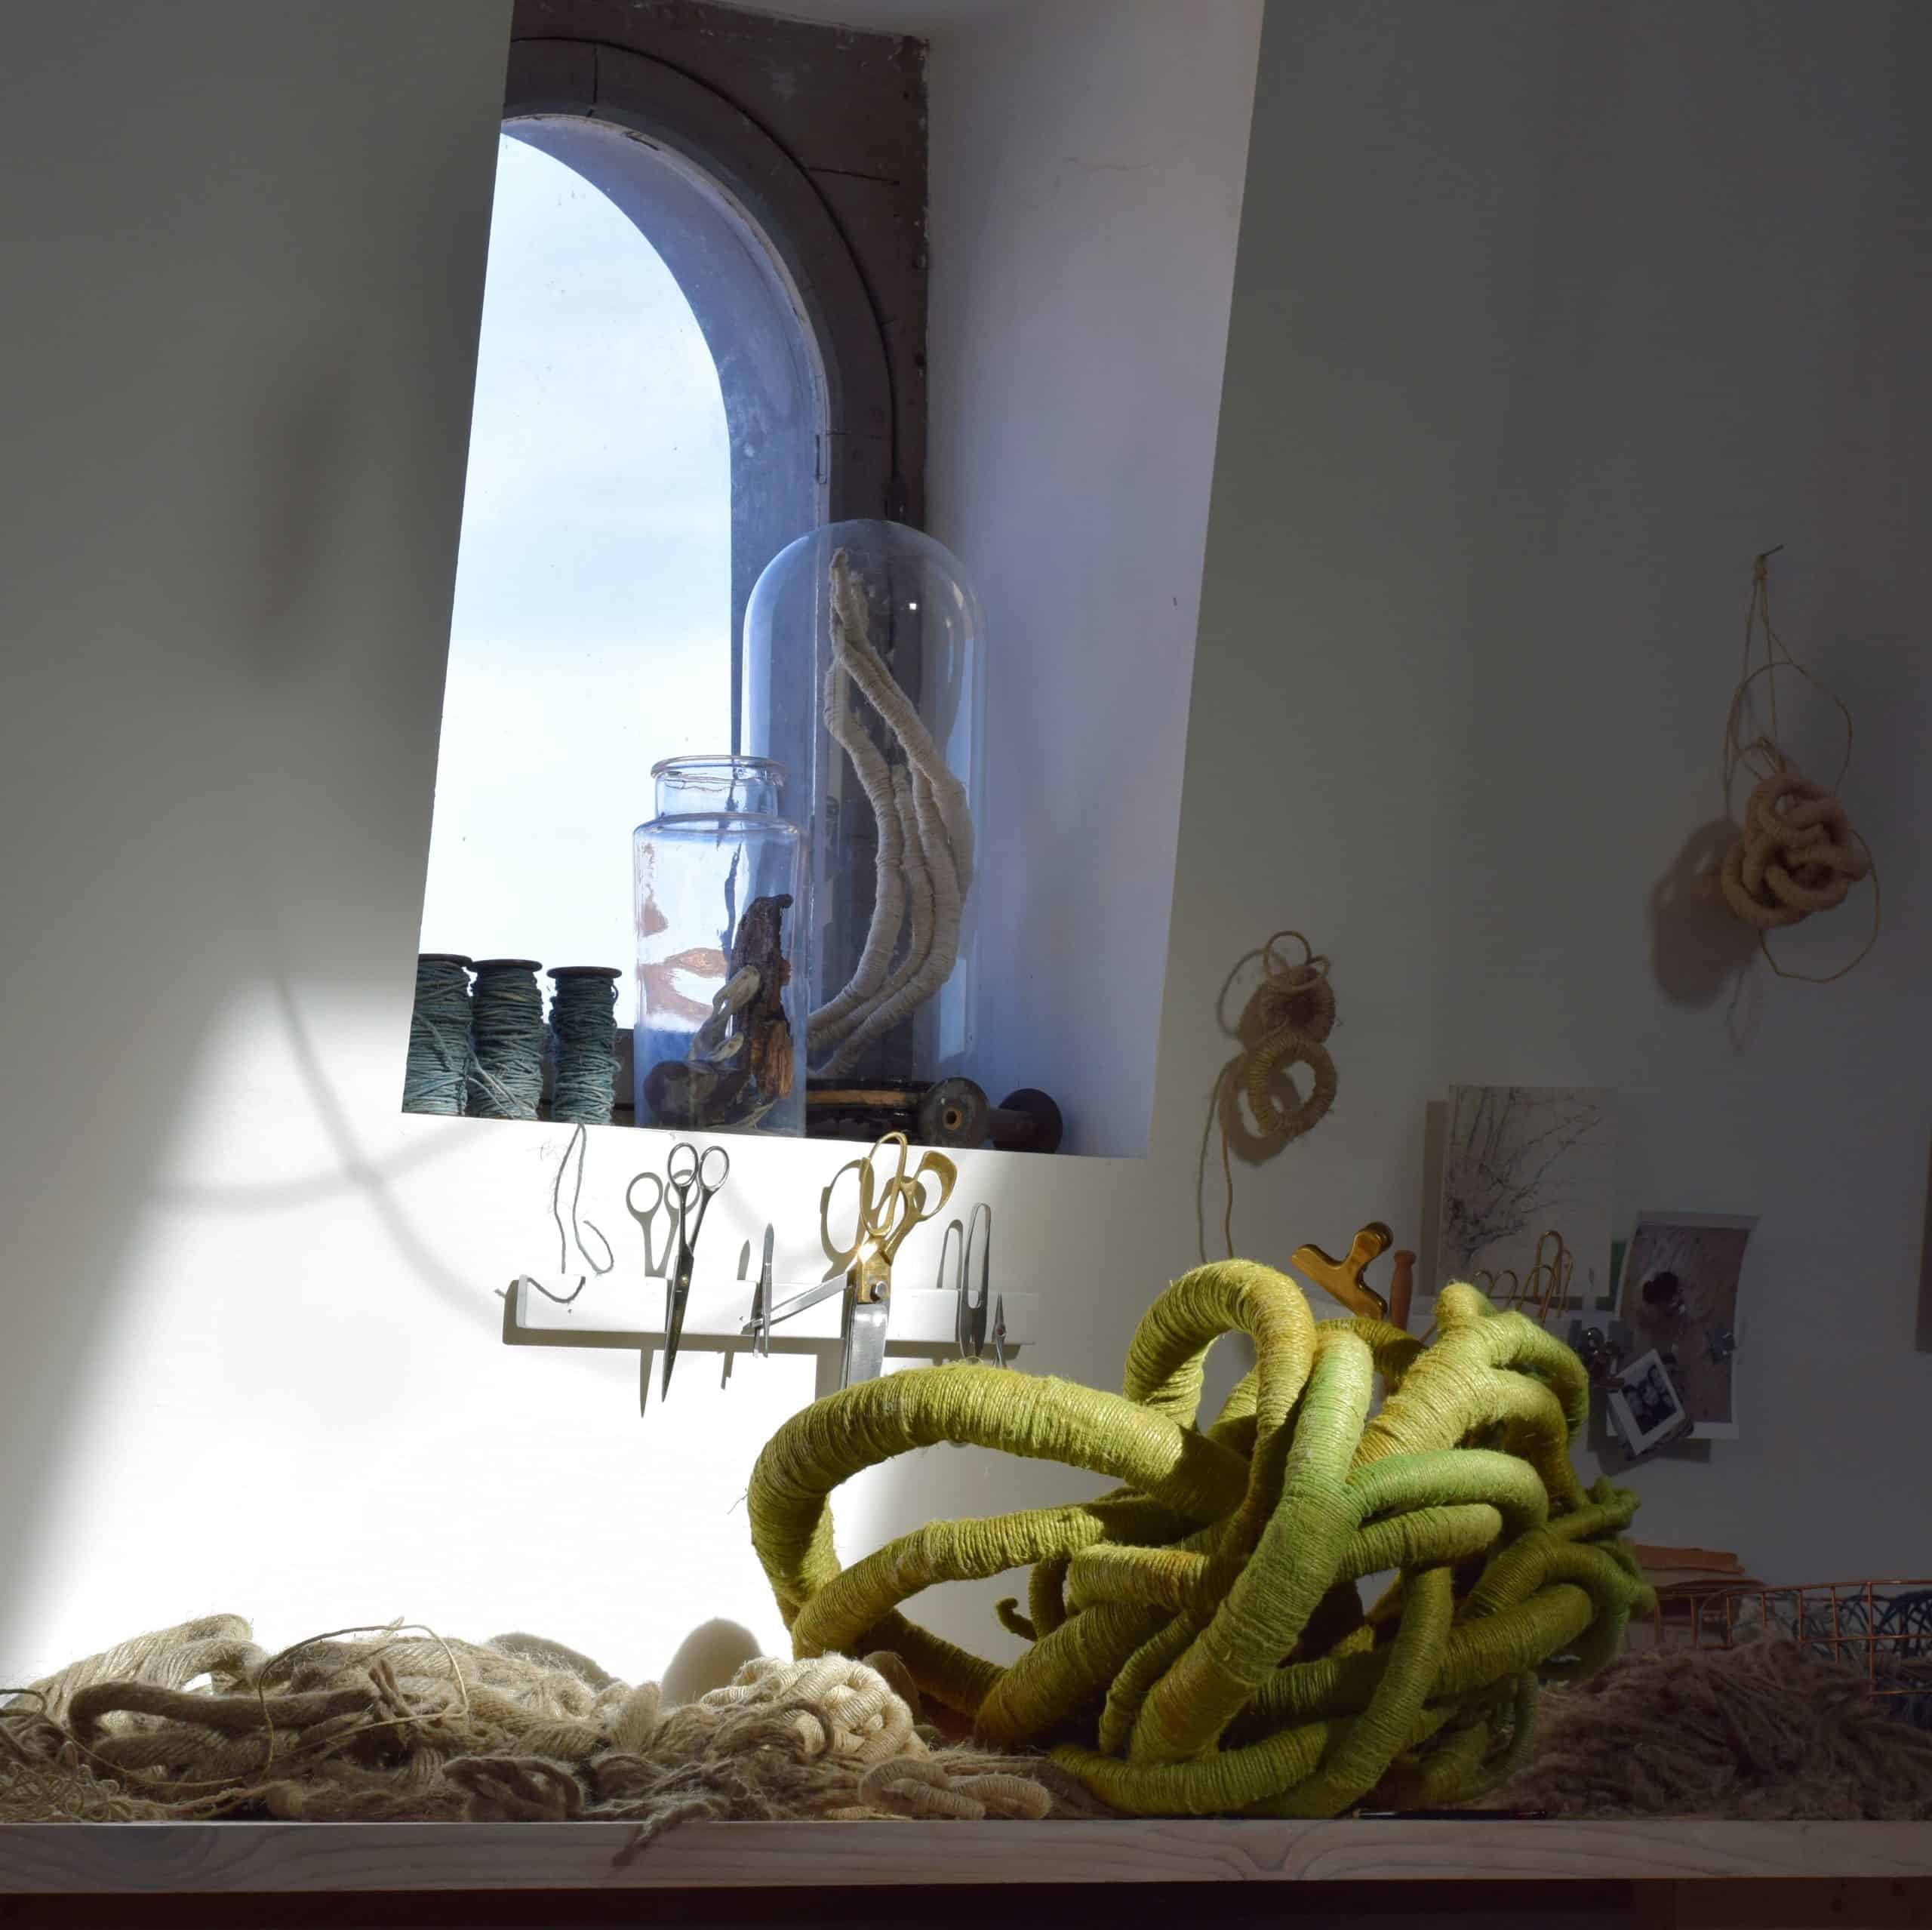 A green sculpture sitting in the sun in sculptor Aude Franjou's workshop